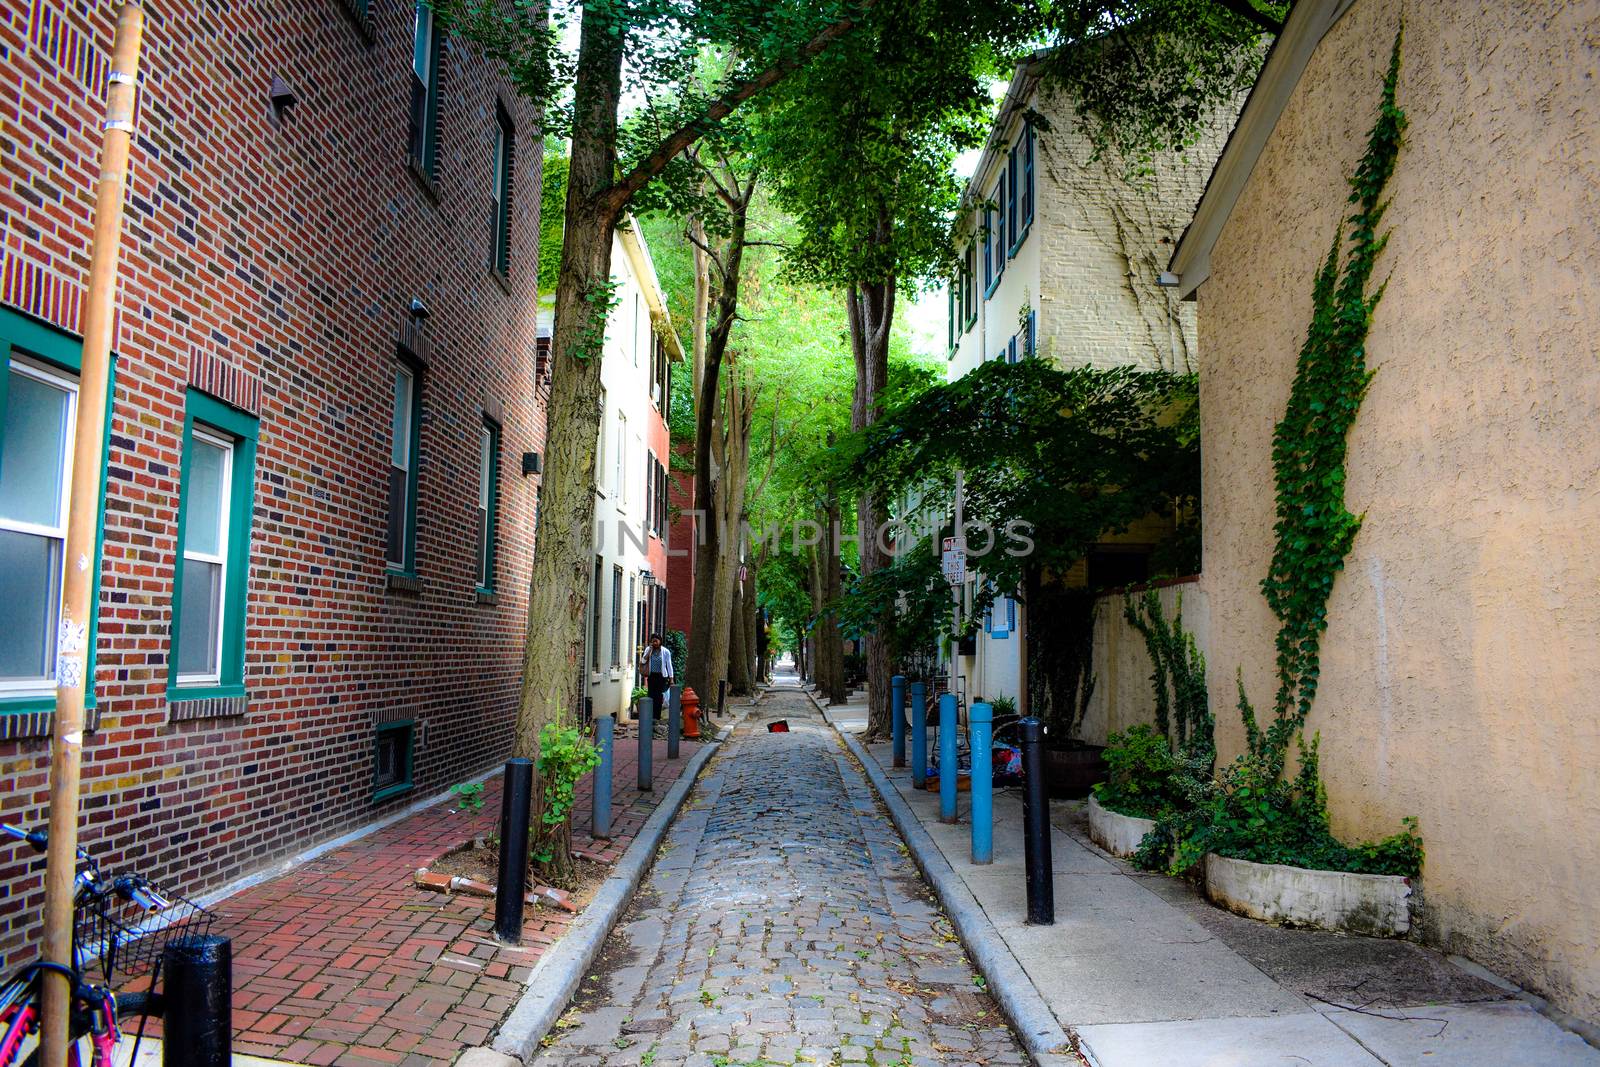 A Cobblestone Alleyway in the City of Philadelphia by bju12290